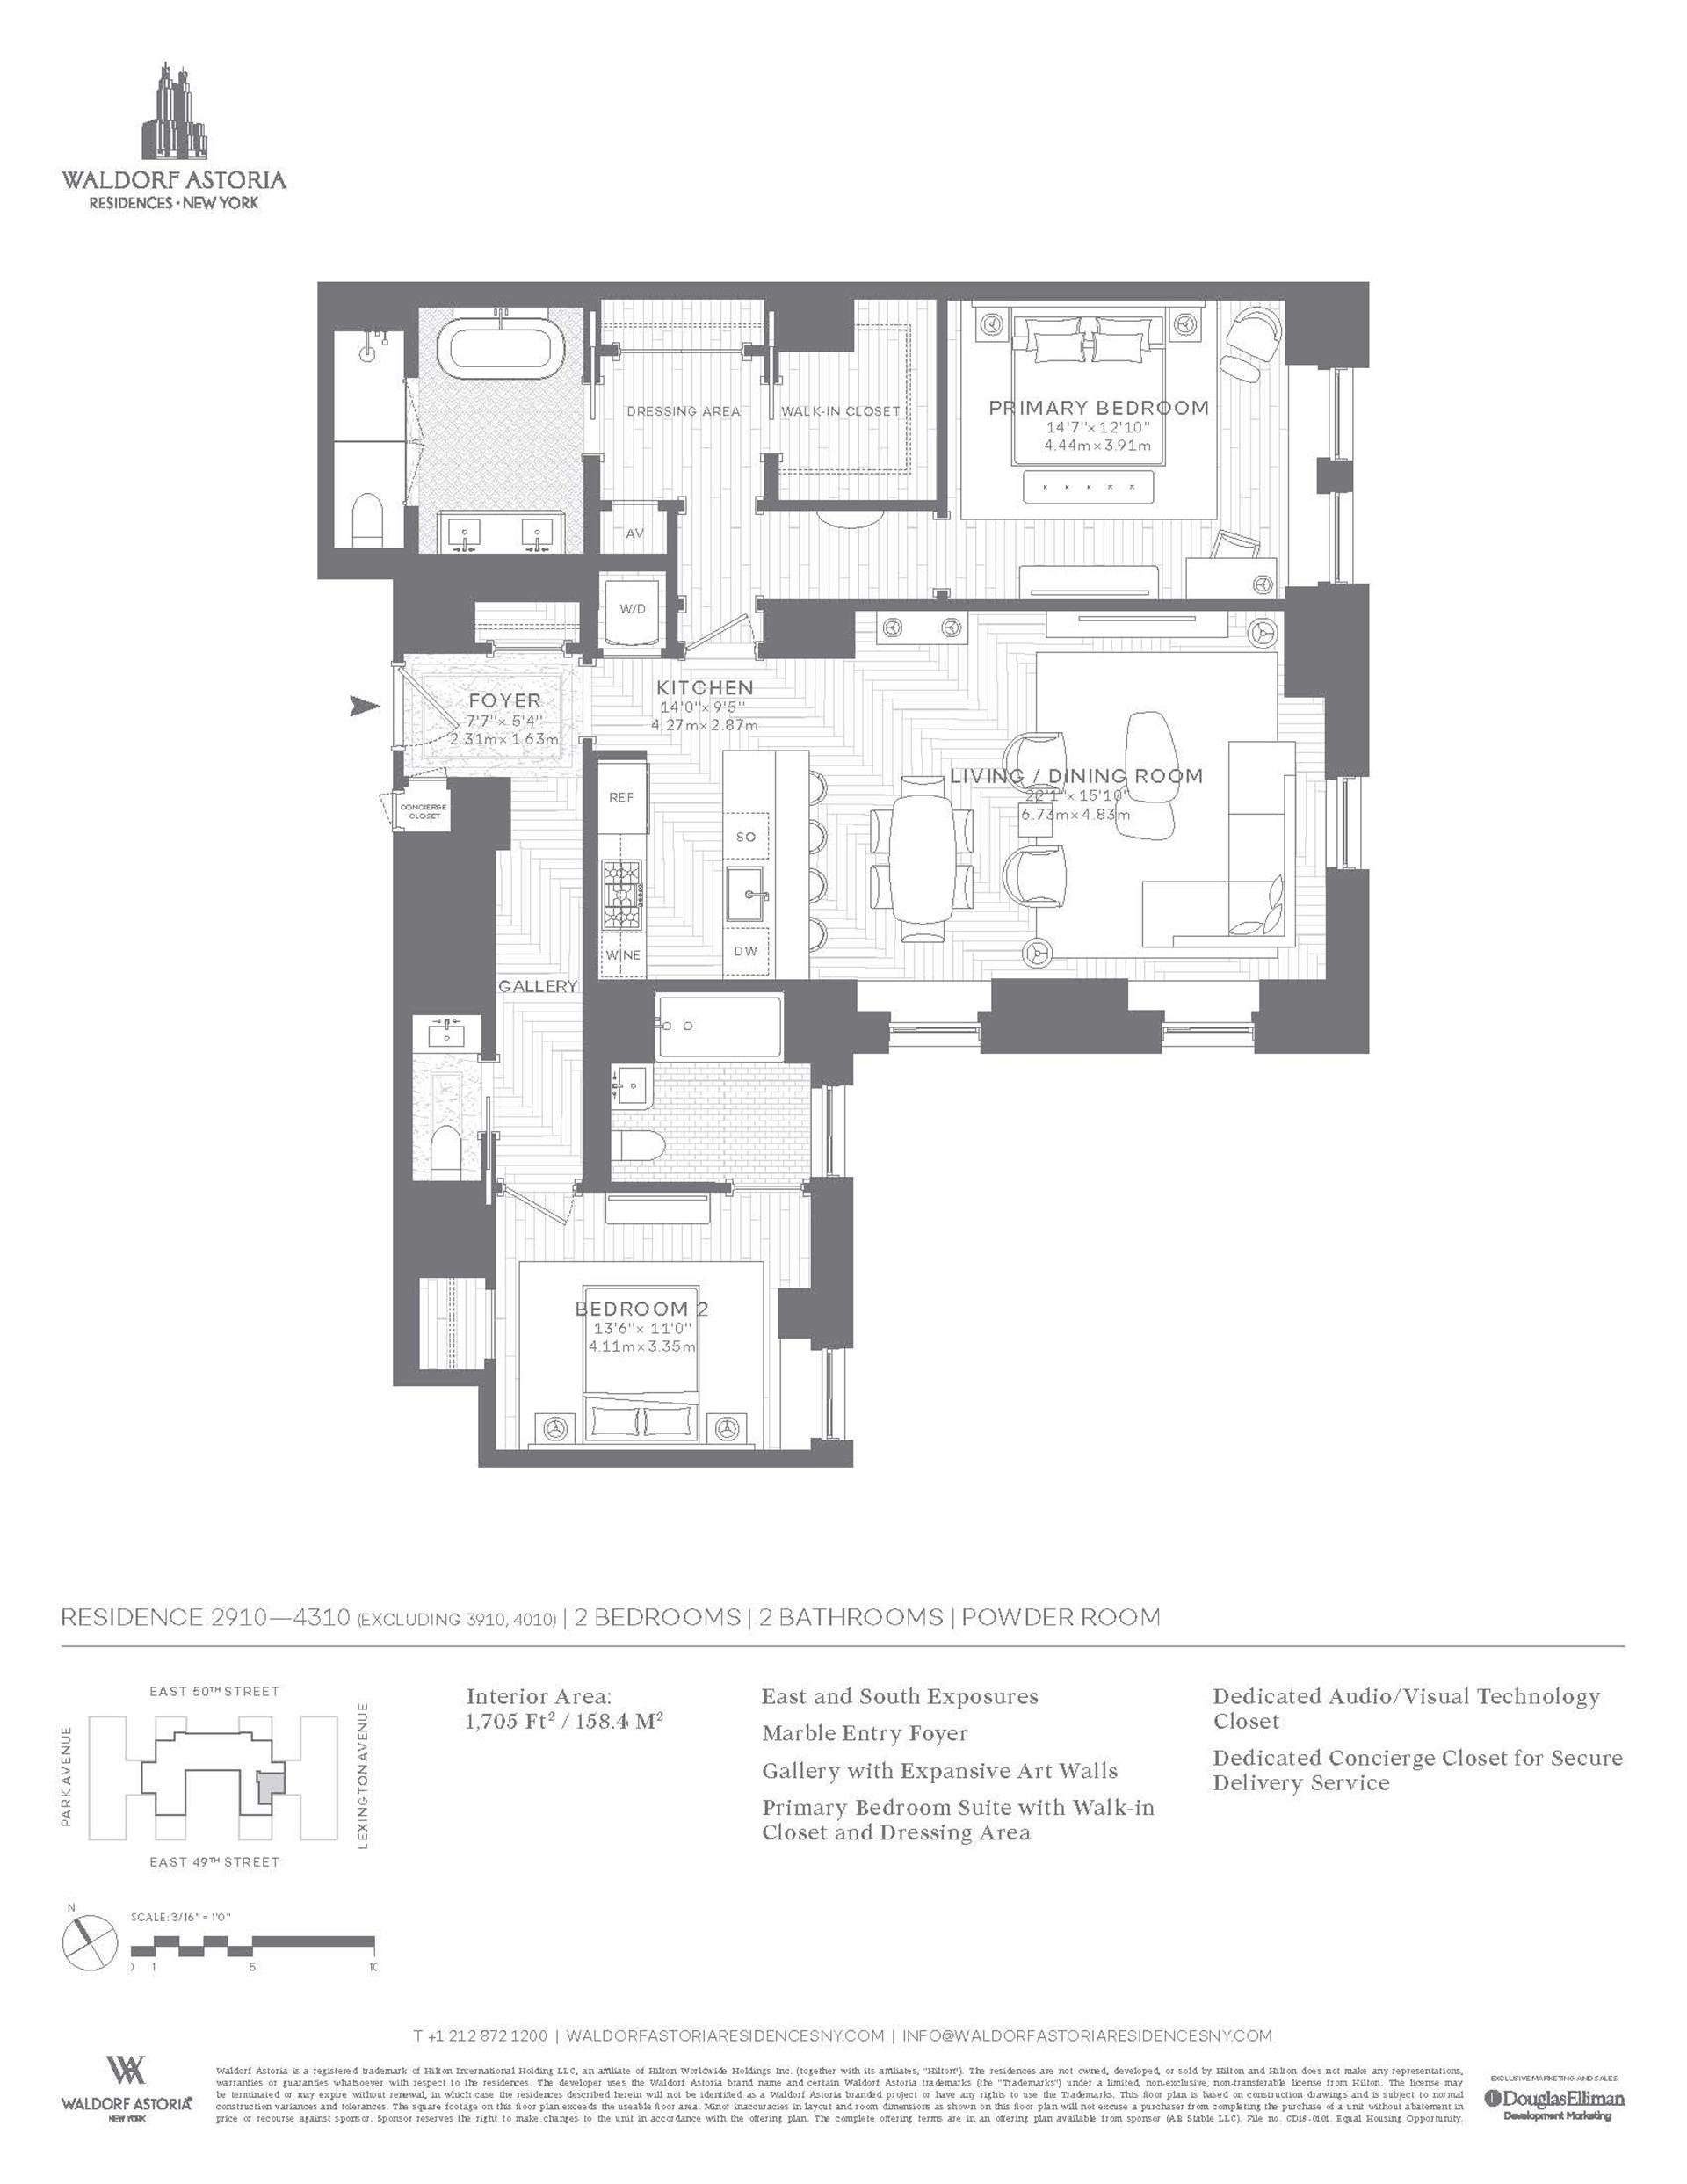 Floorplan for 303 Park Avenue, 2910